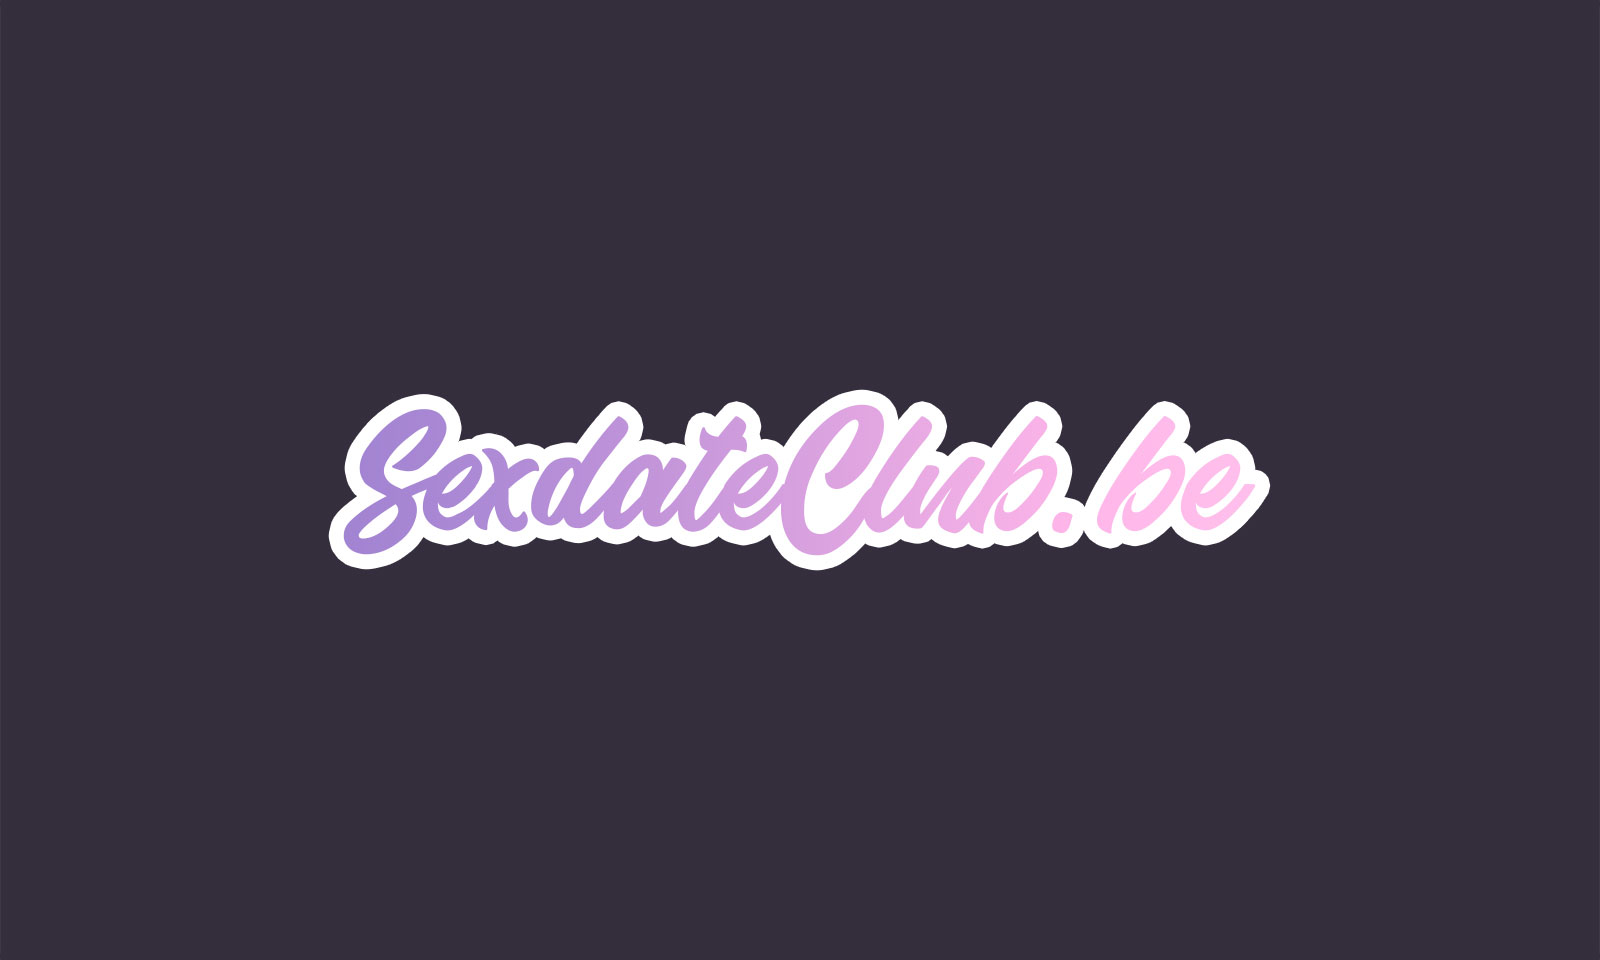 Wat is SexdateClub.be